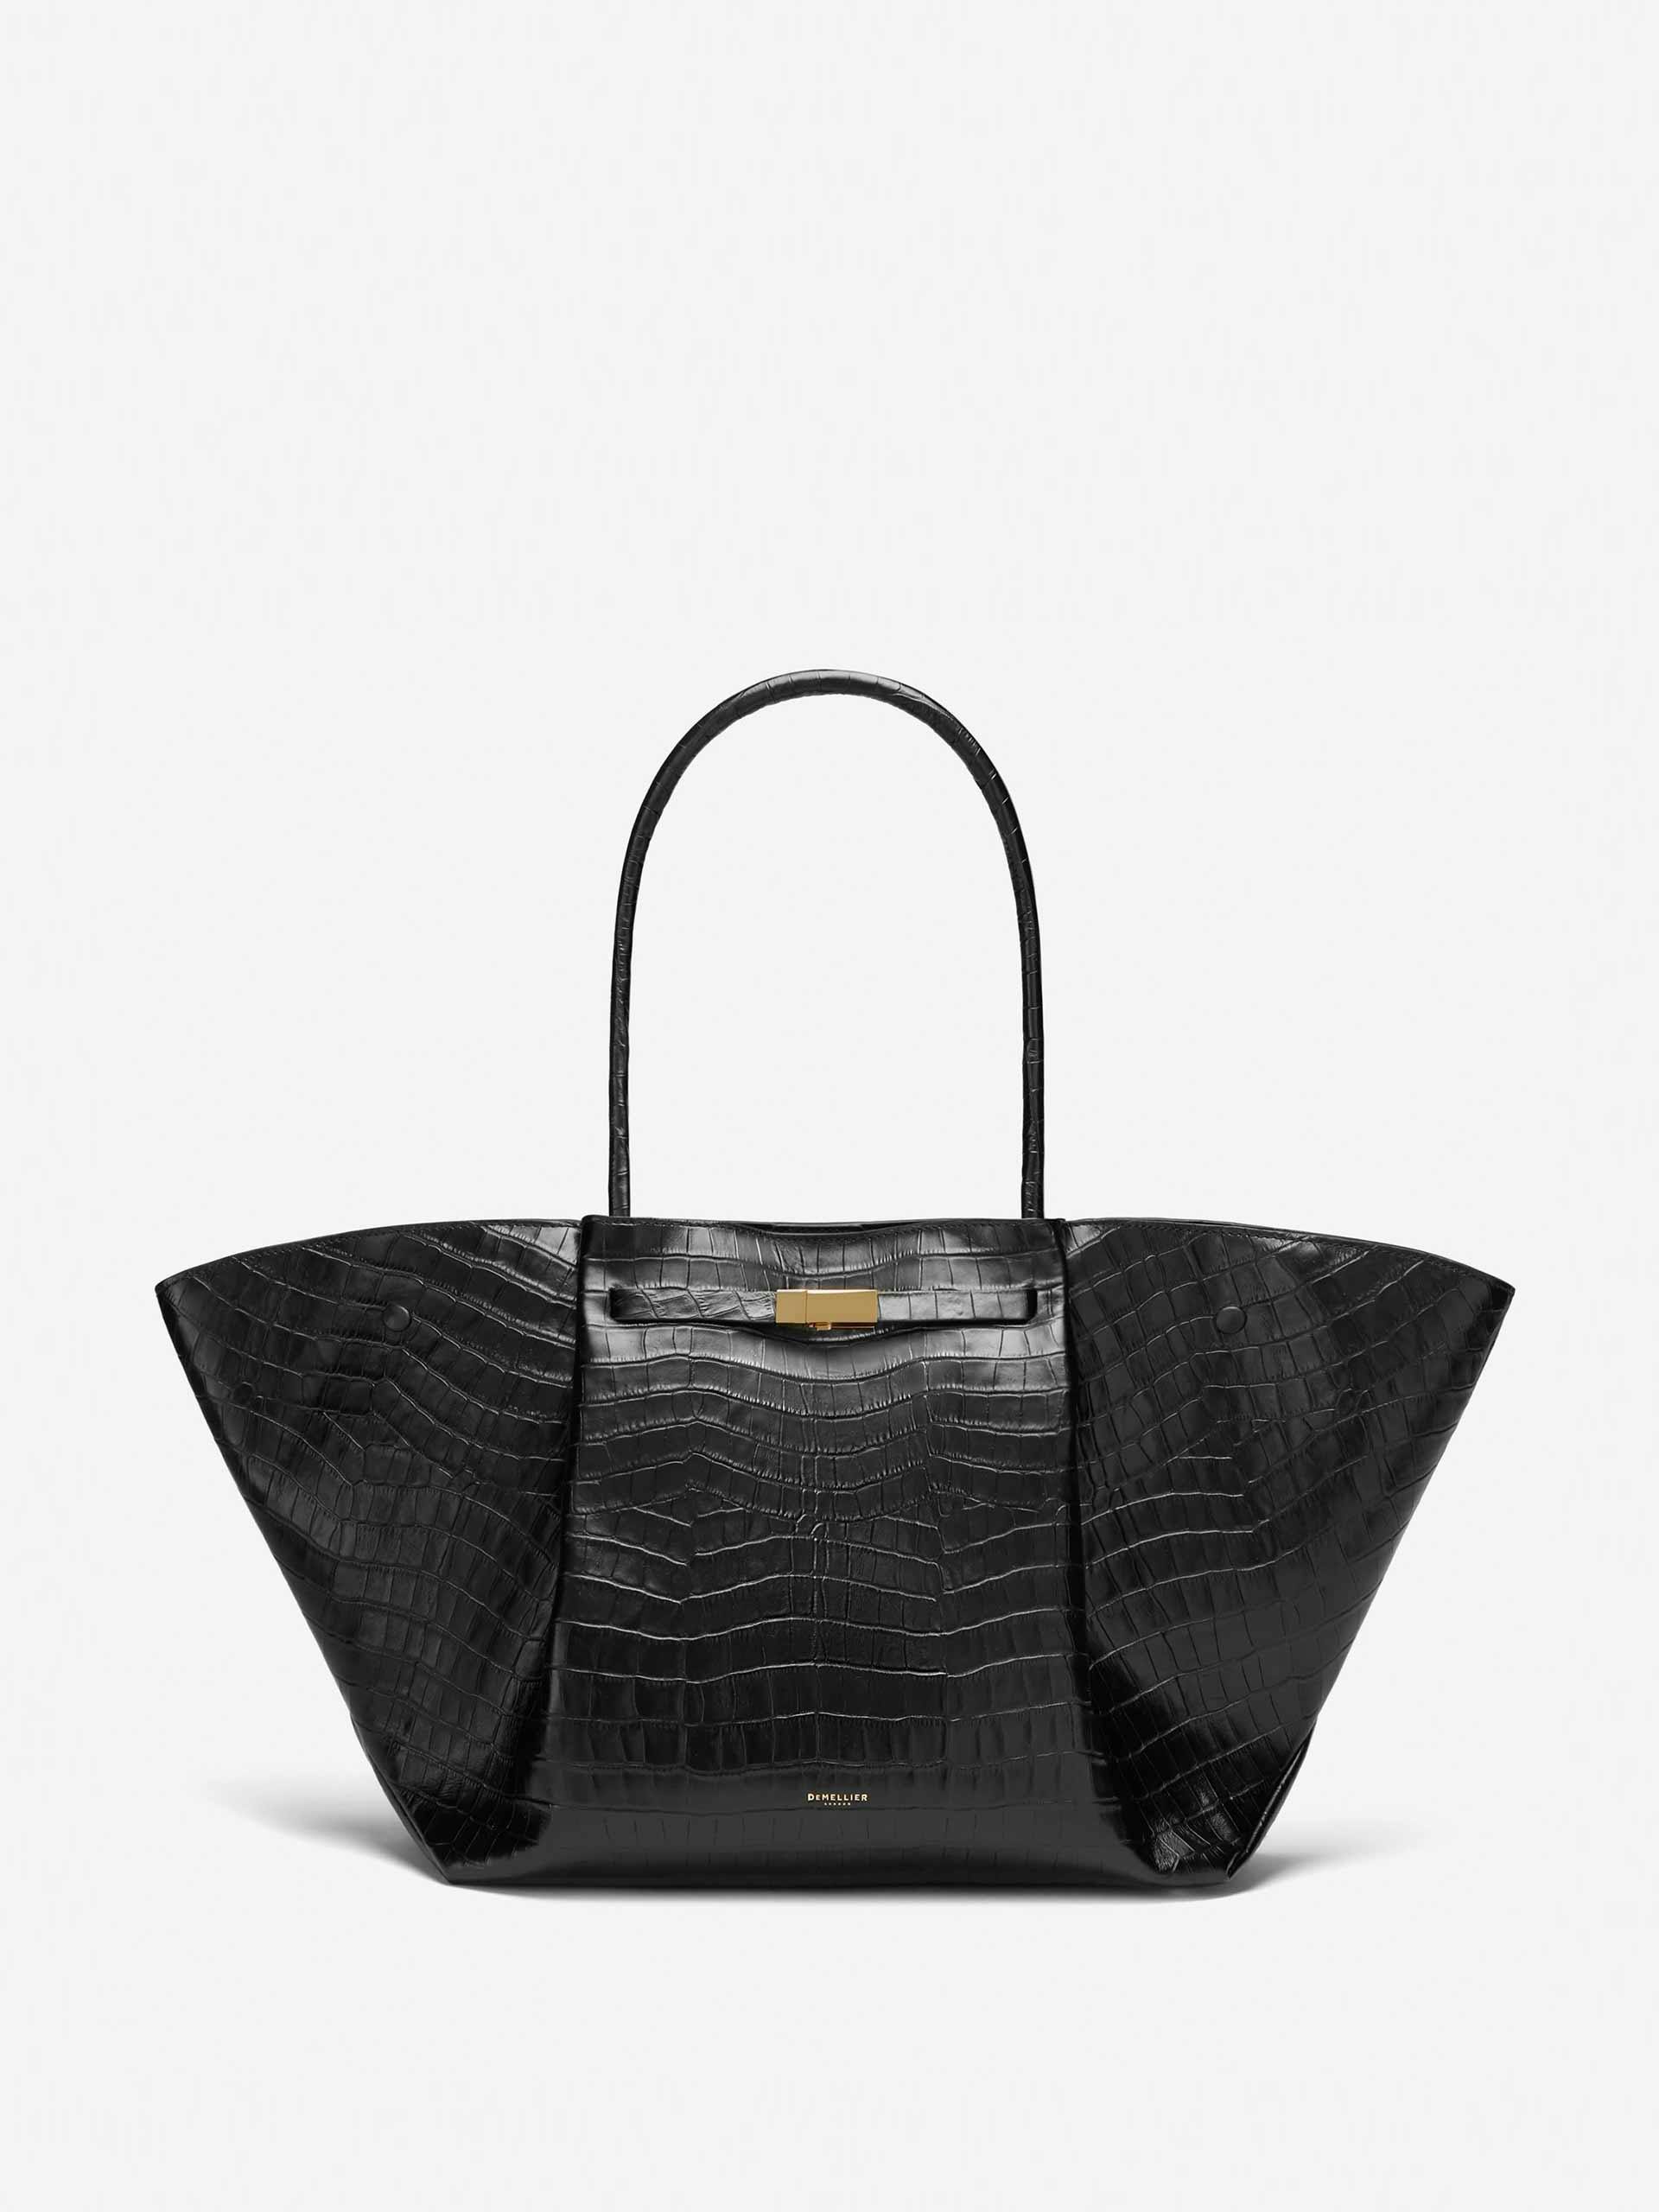 Black croc effect handbag